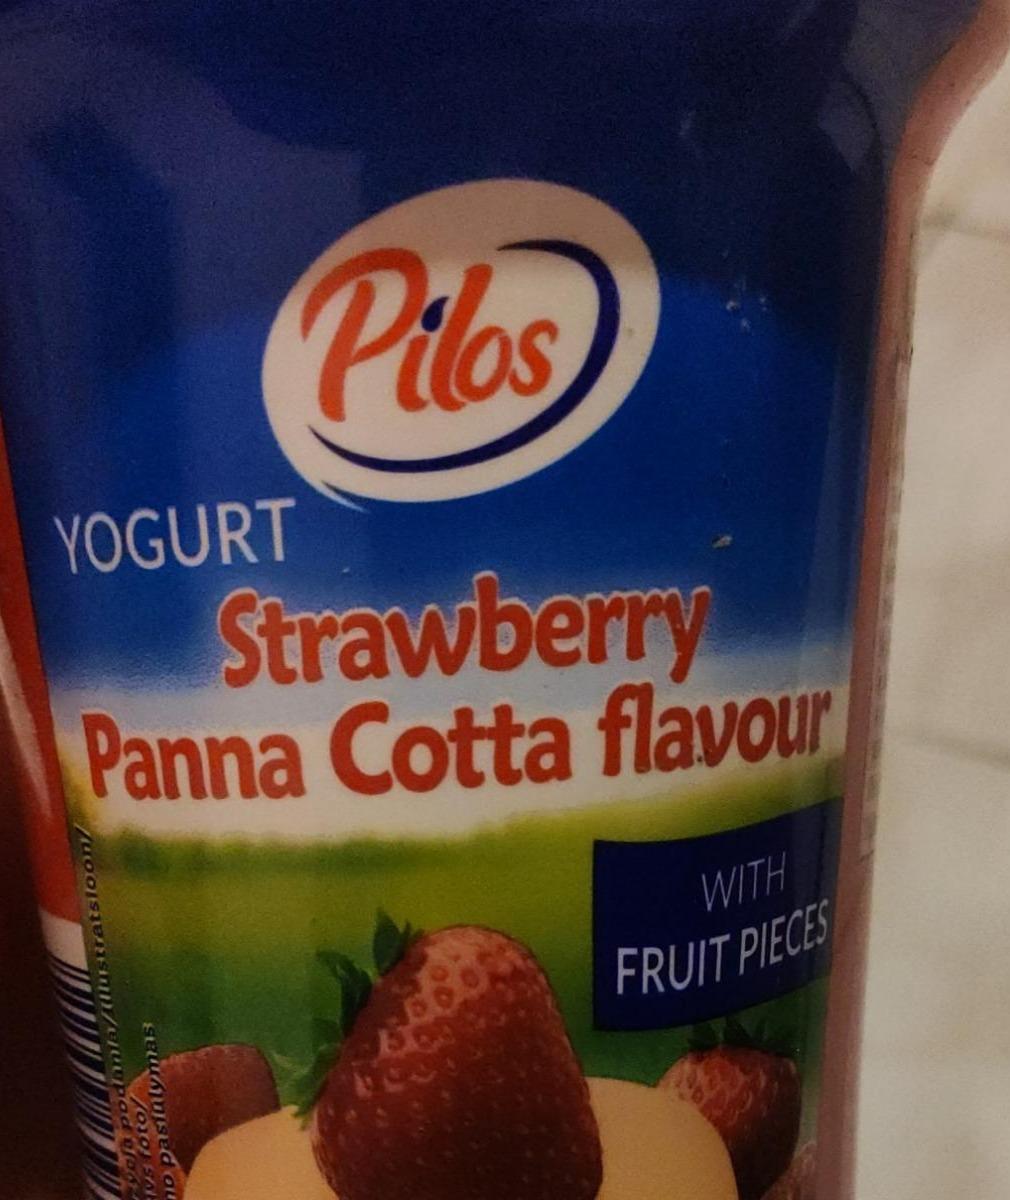 Фото - Yogurt Strawberry Panna Cotta flavour with fruit pieces Pilos